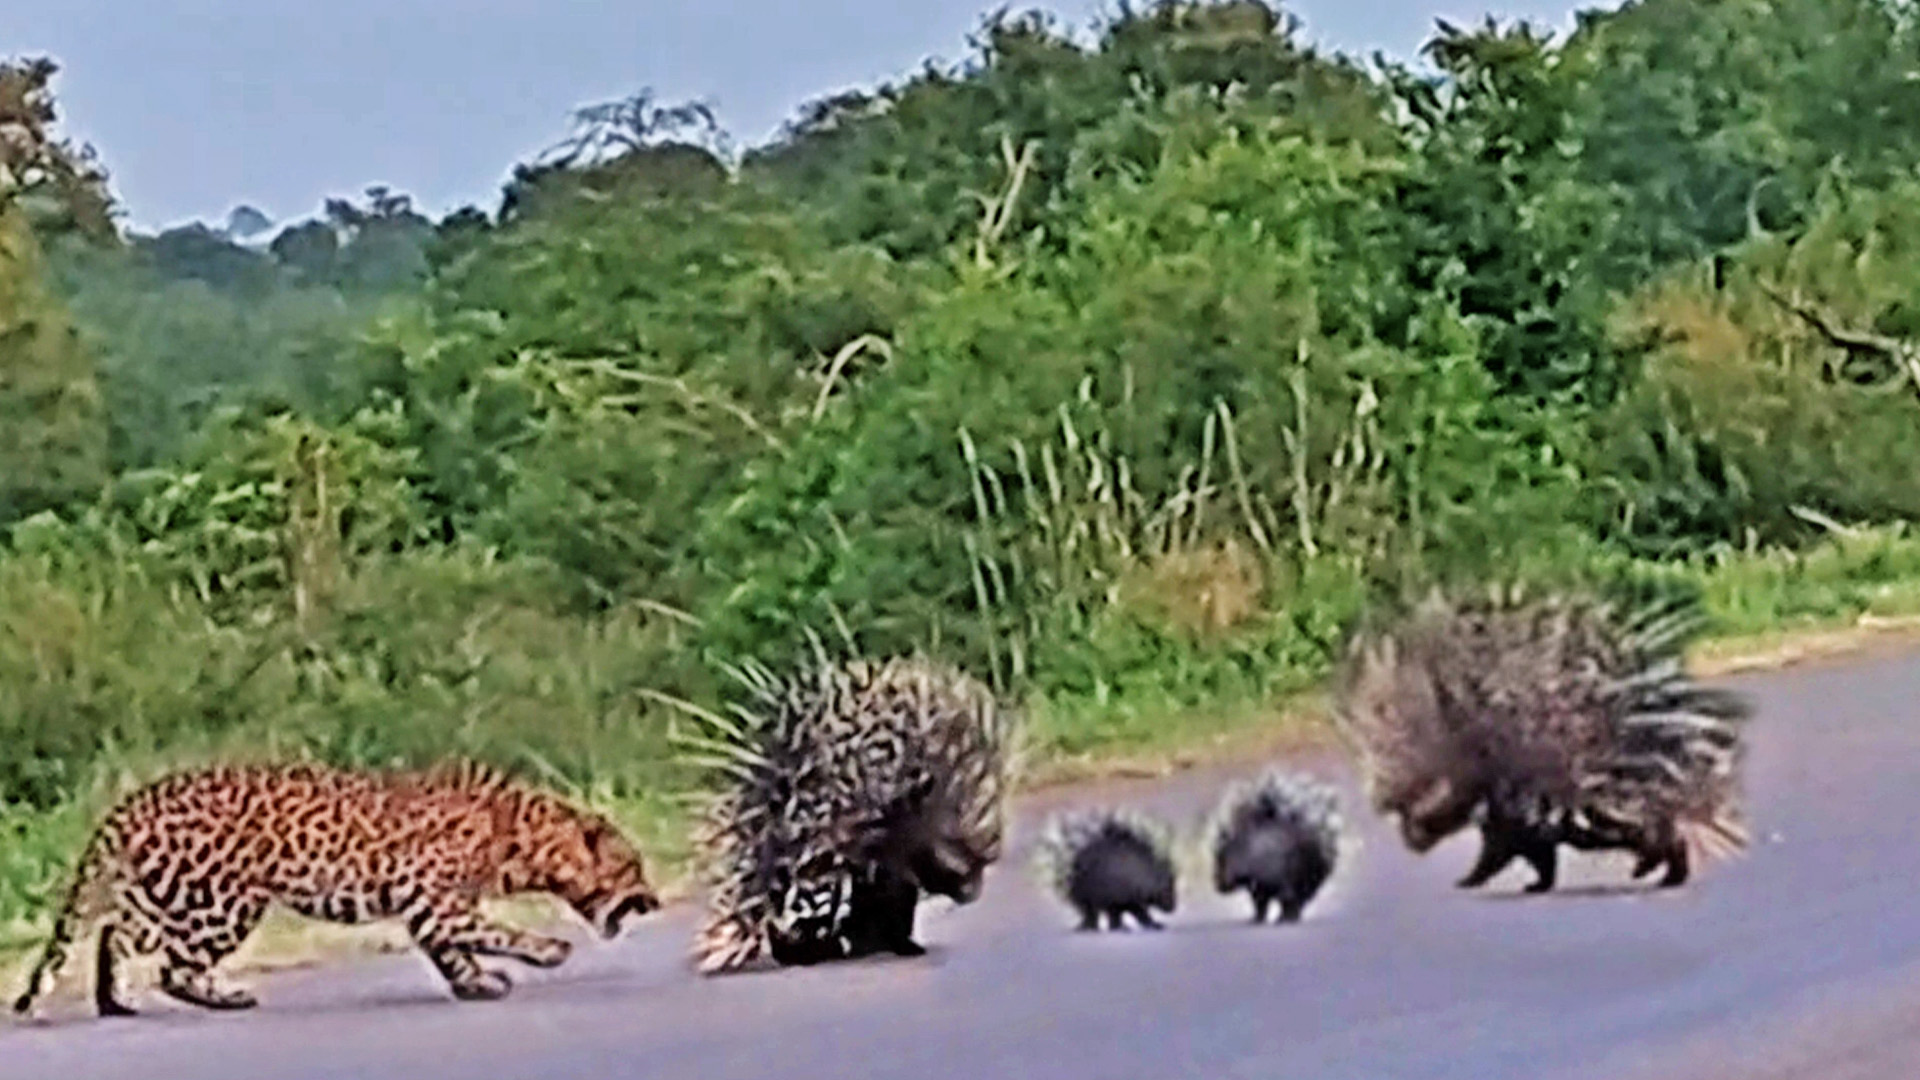 Porcupine Parents Protect Babies from Leopard